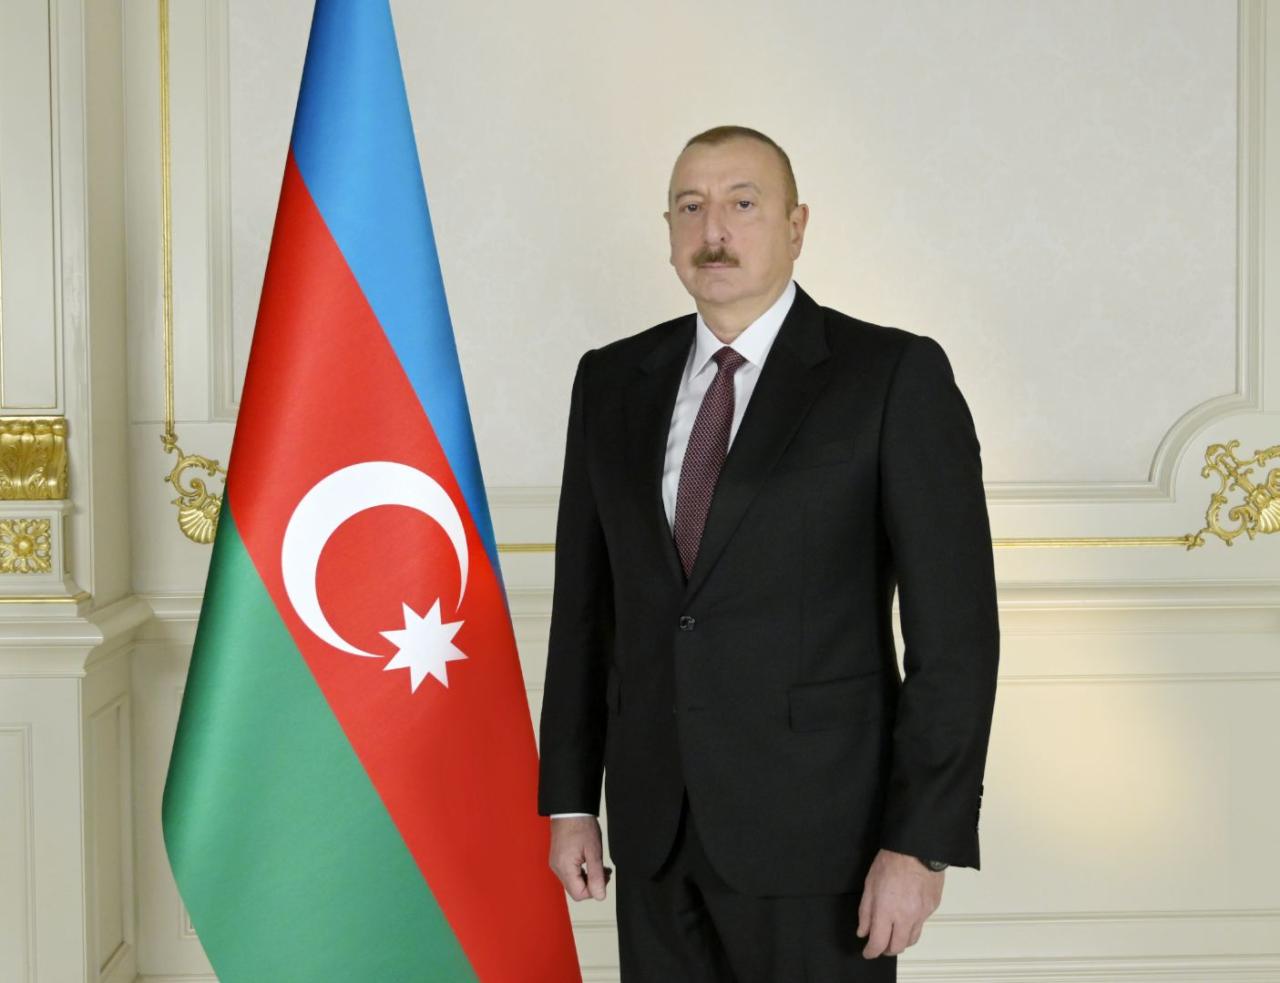 President Ilham Aliyev awards Eldar Mammadaliyev for his work in state bodies